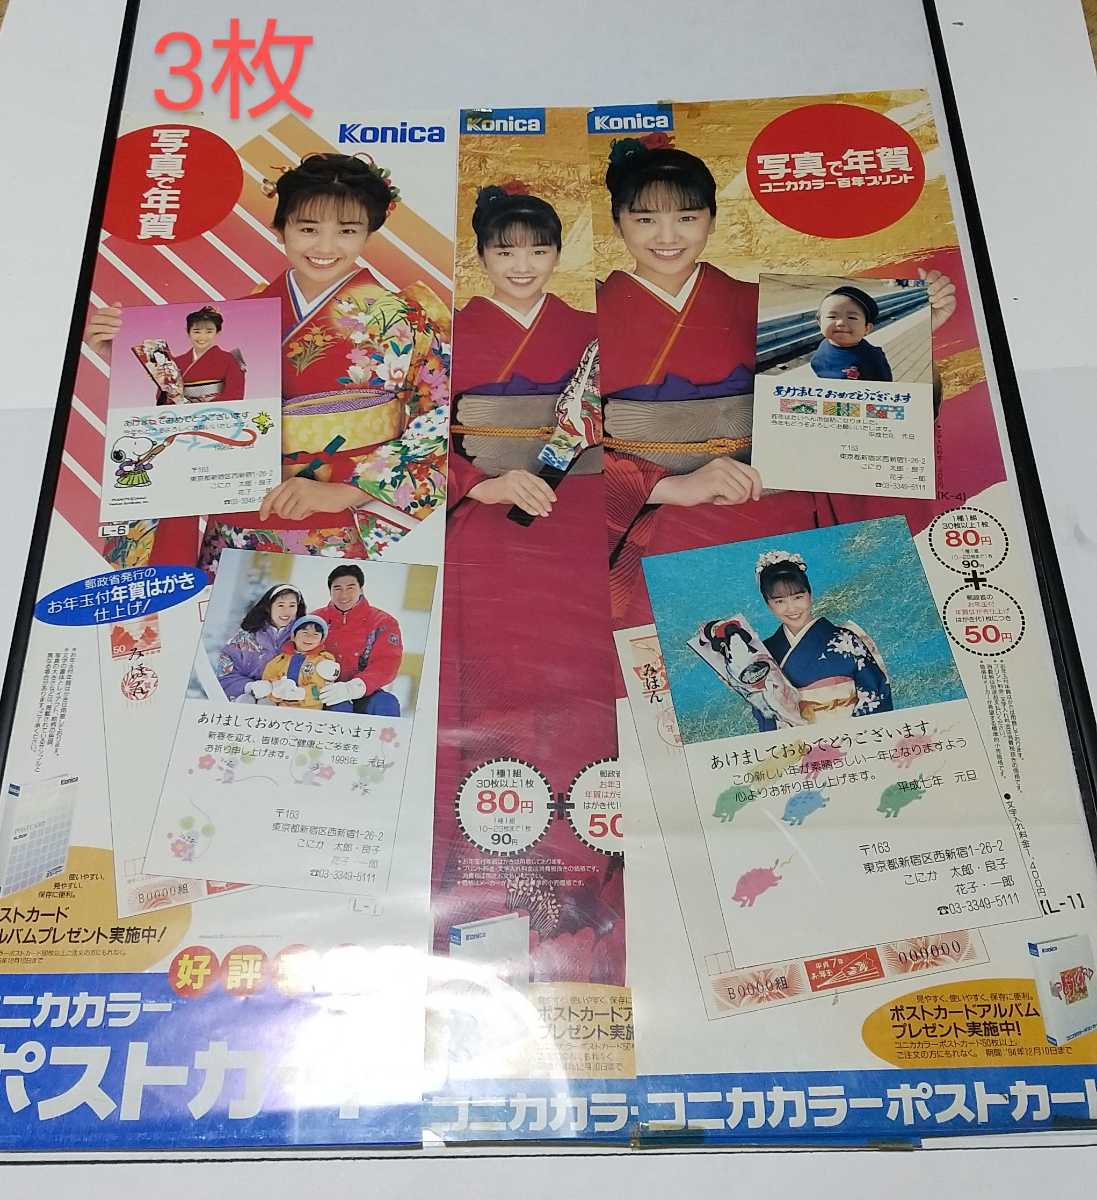 Hikaru Nishida / Konica New Year's greetings with photos Konica color postcard sales promotion mini poster set of 7 not for sale, to, Hikaru Nishida, others